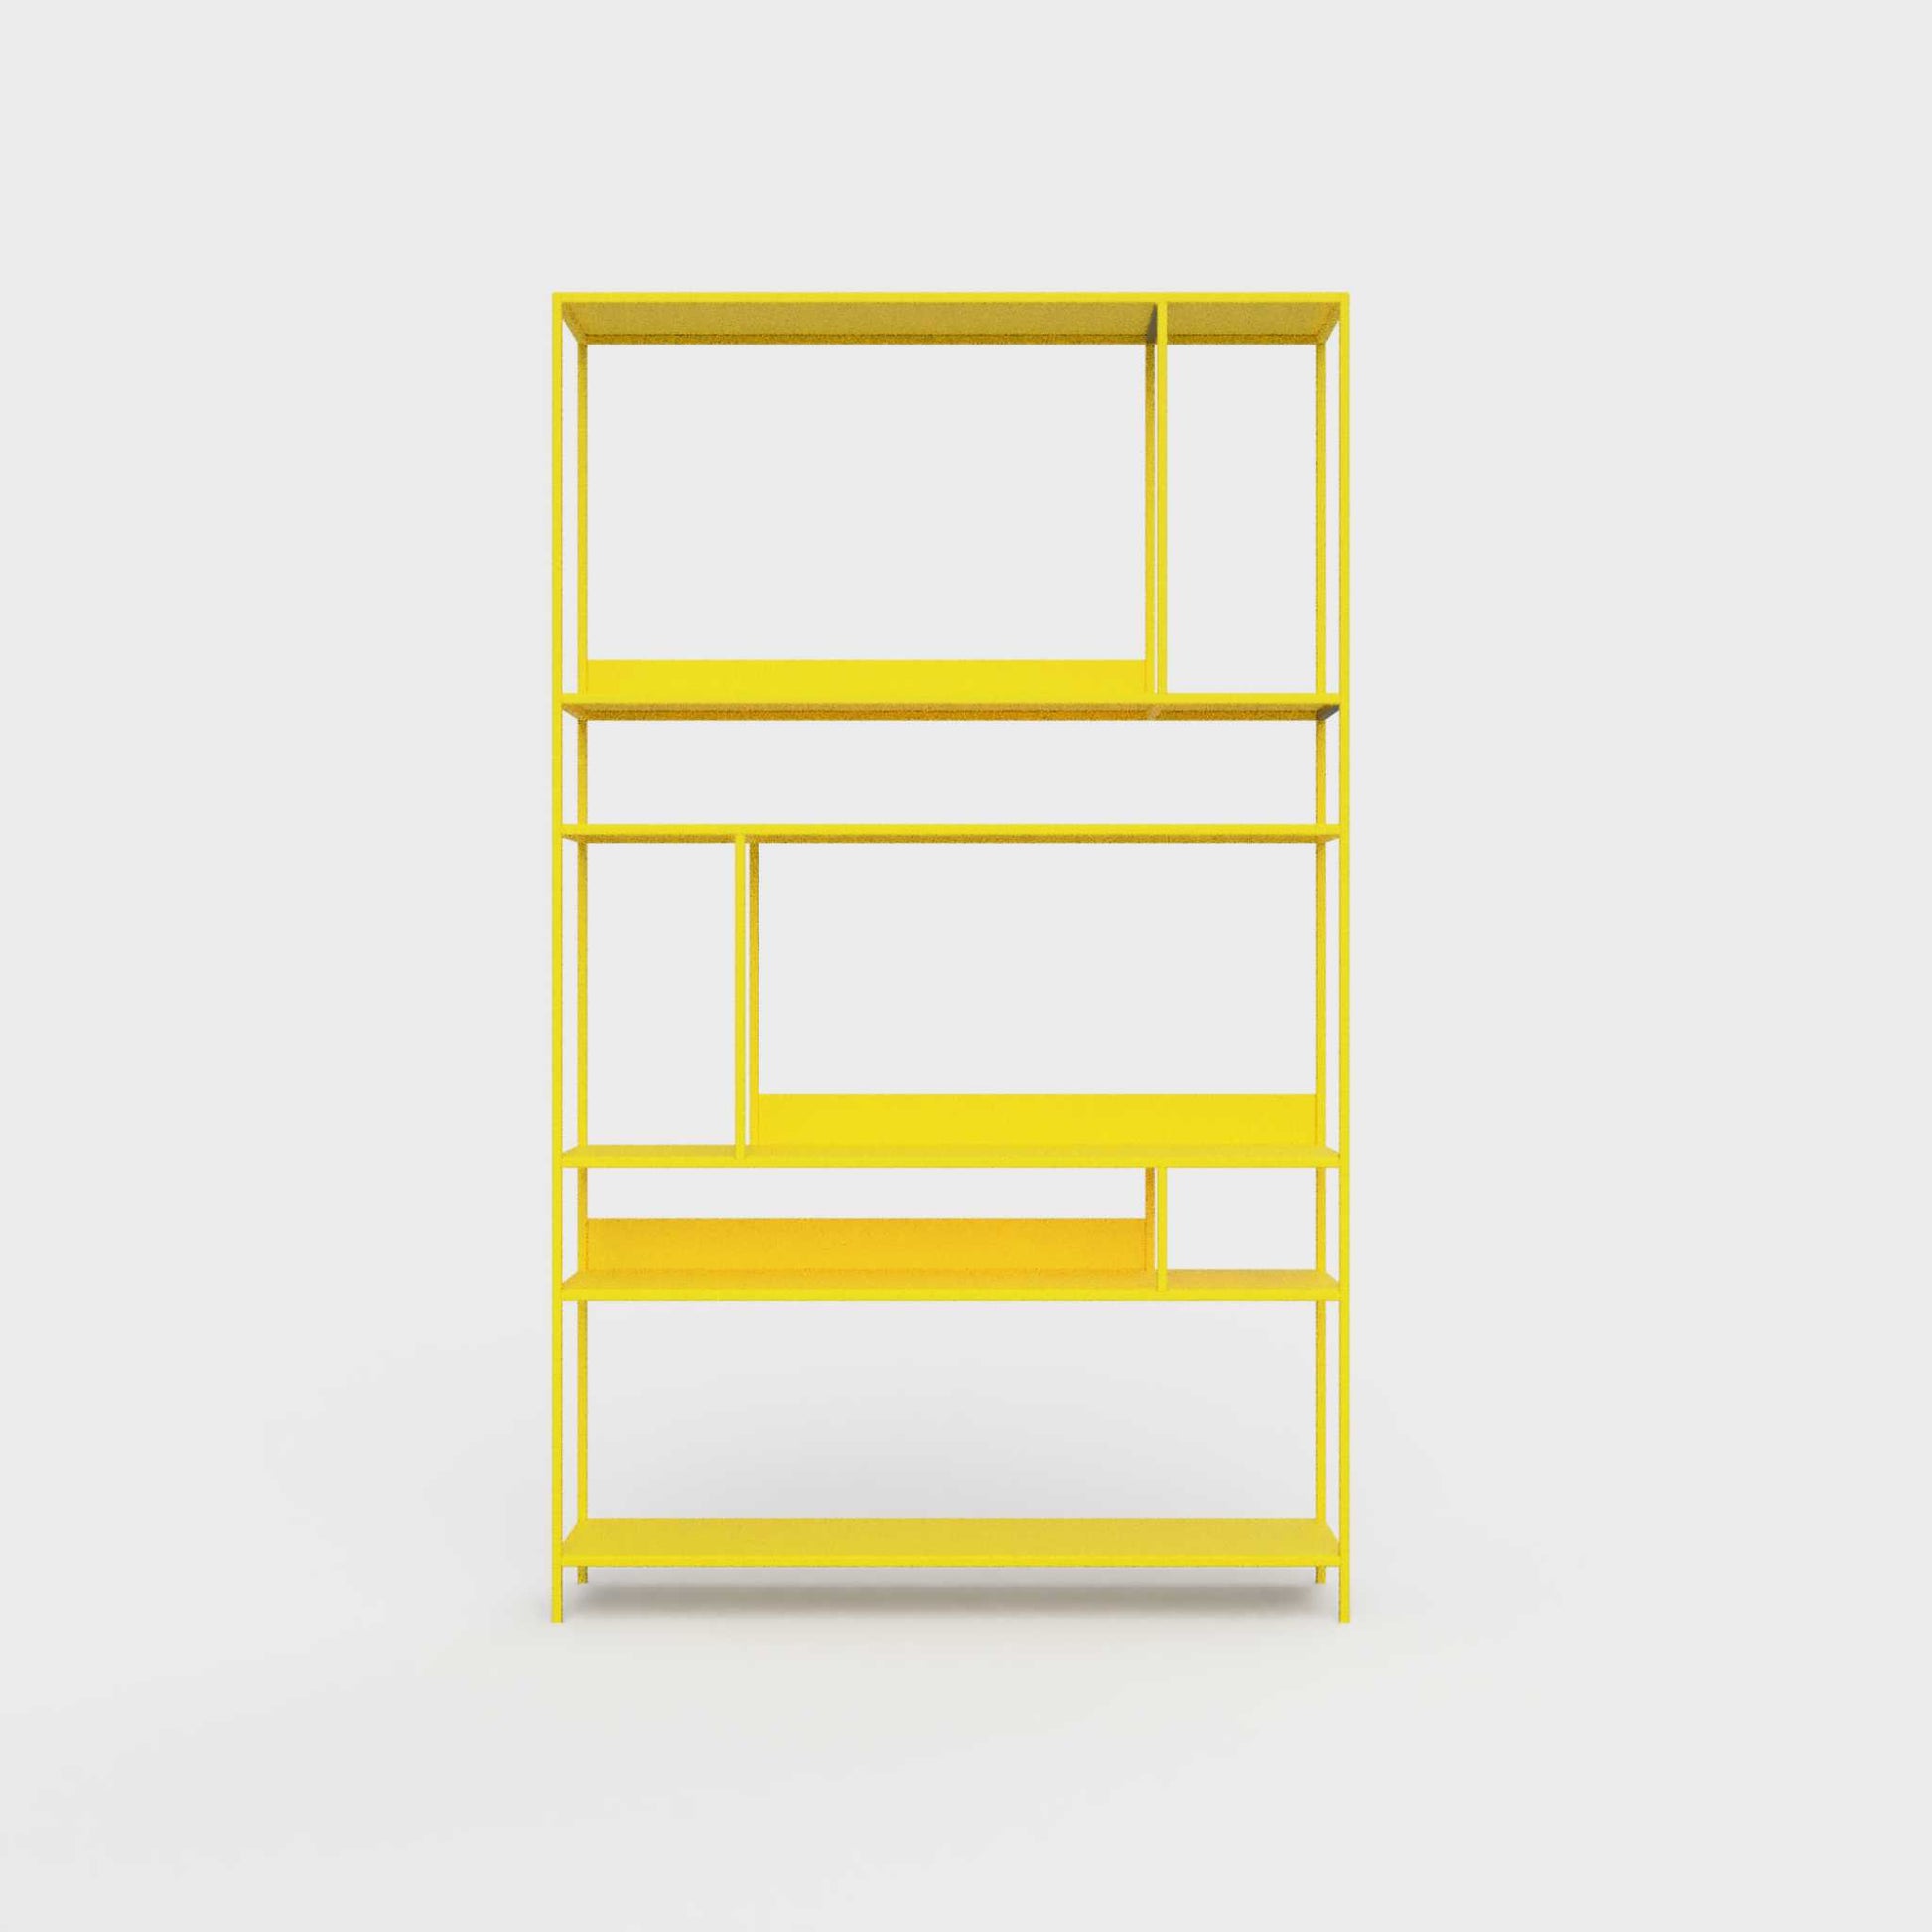 ÉTAUDORÉ Floks 01 powder coated steel bookcase in lemon yellow